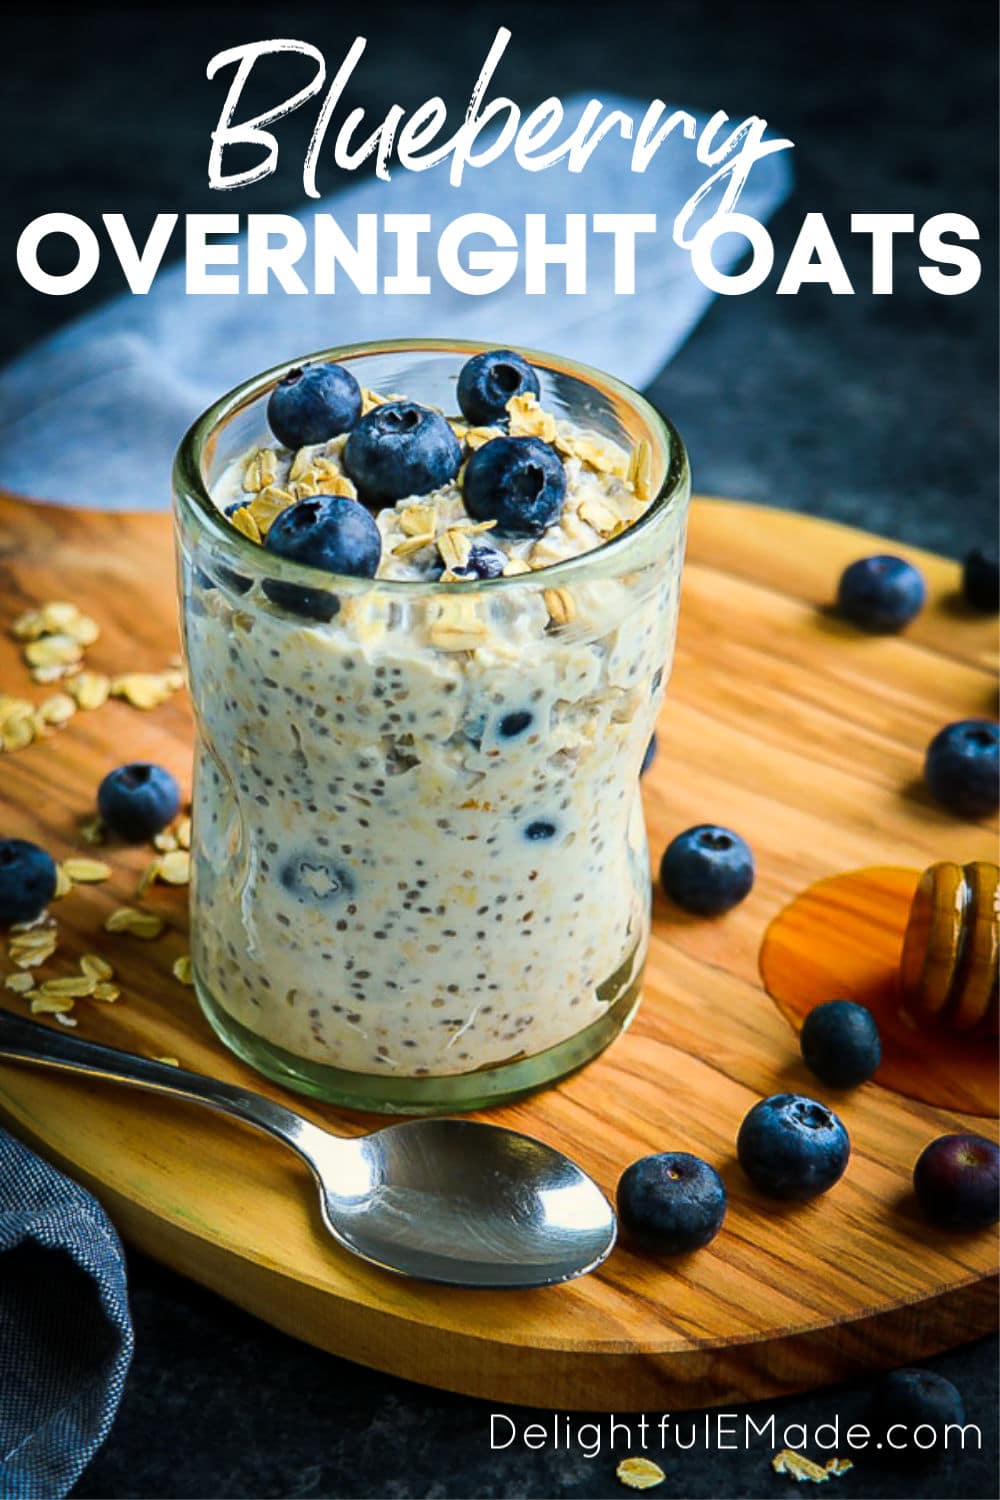 Overnight Oats Recipe - How to Make Overnight Oats